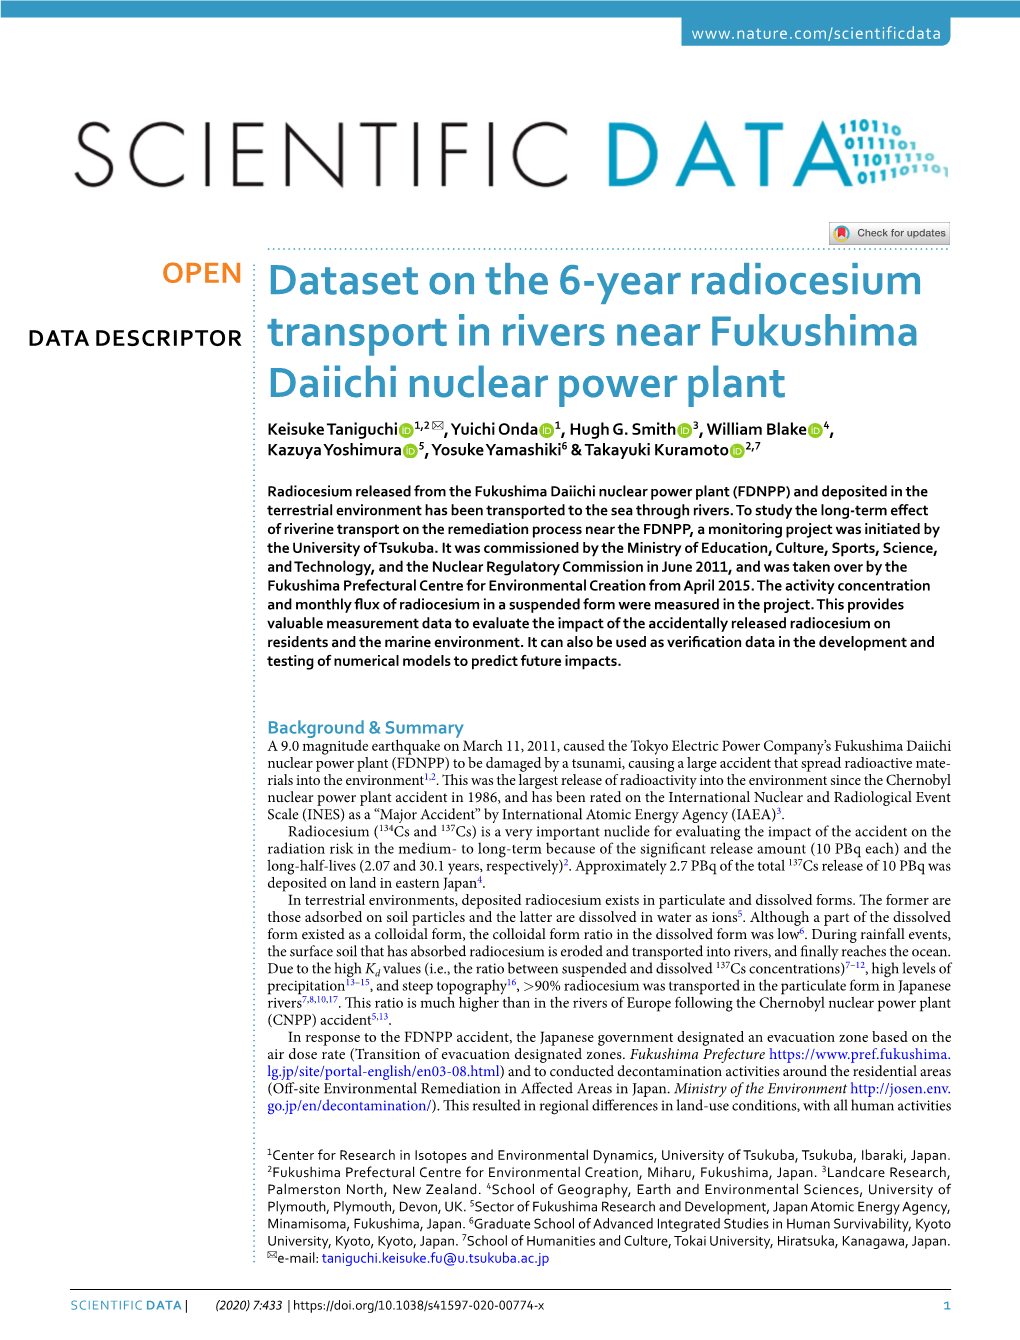 Dataset on the 6-Year Radiocesium Transport in Rivers Near Fukushima